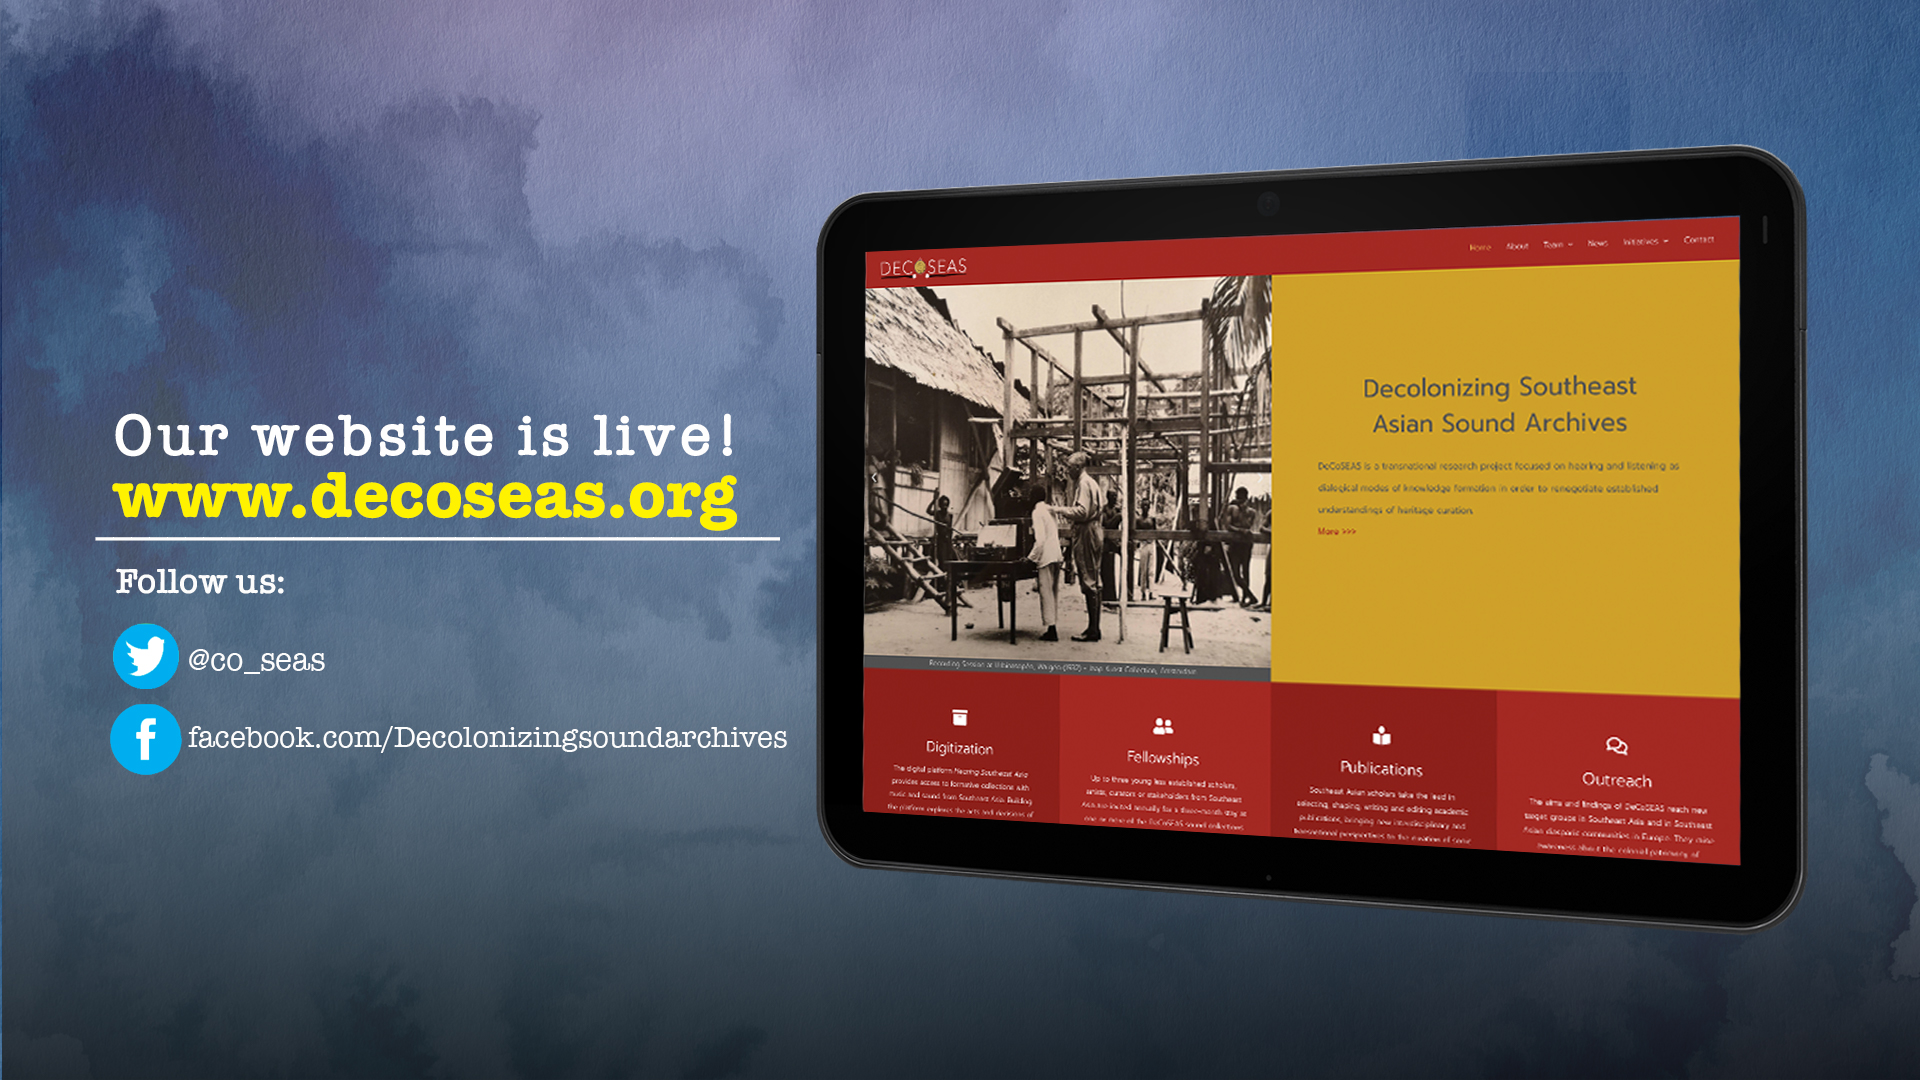 The DeCoSEAS website is now live!